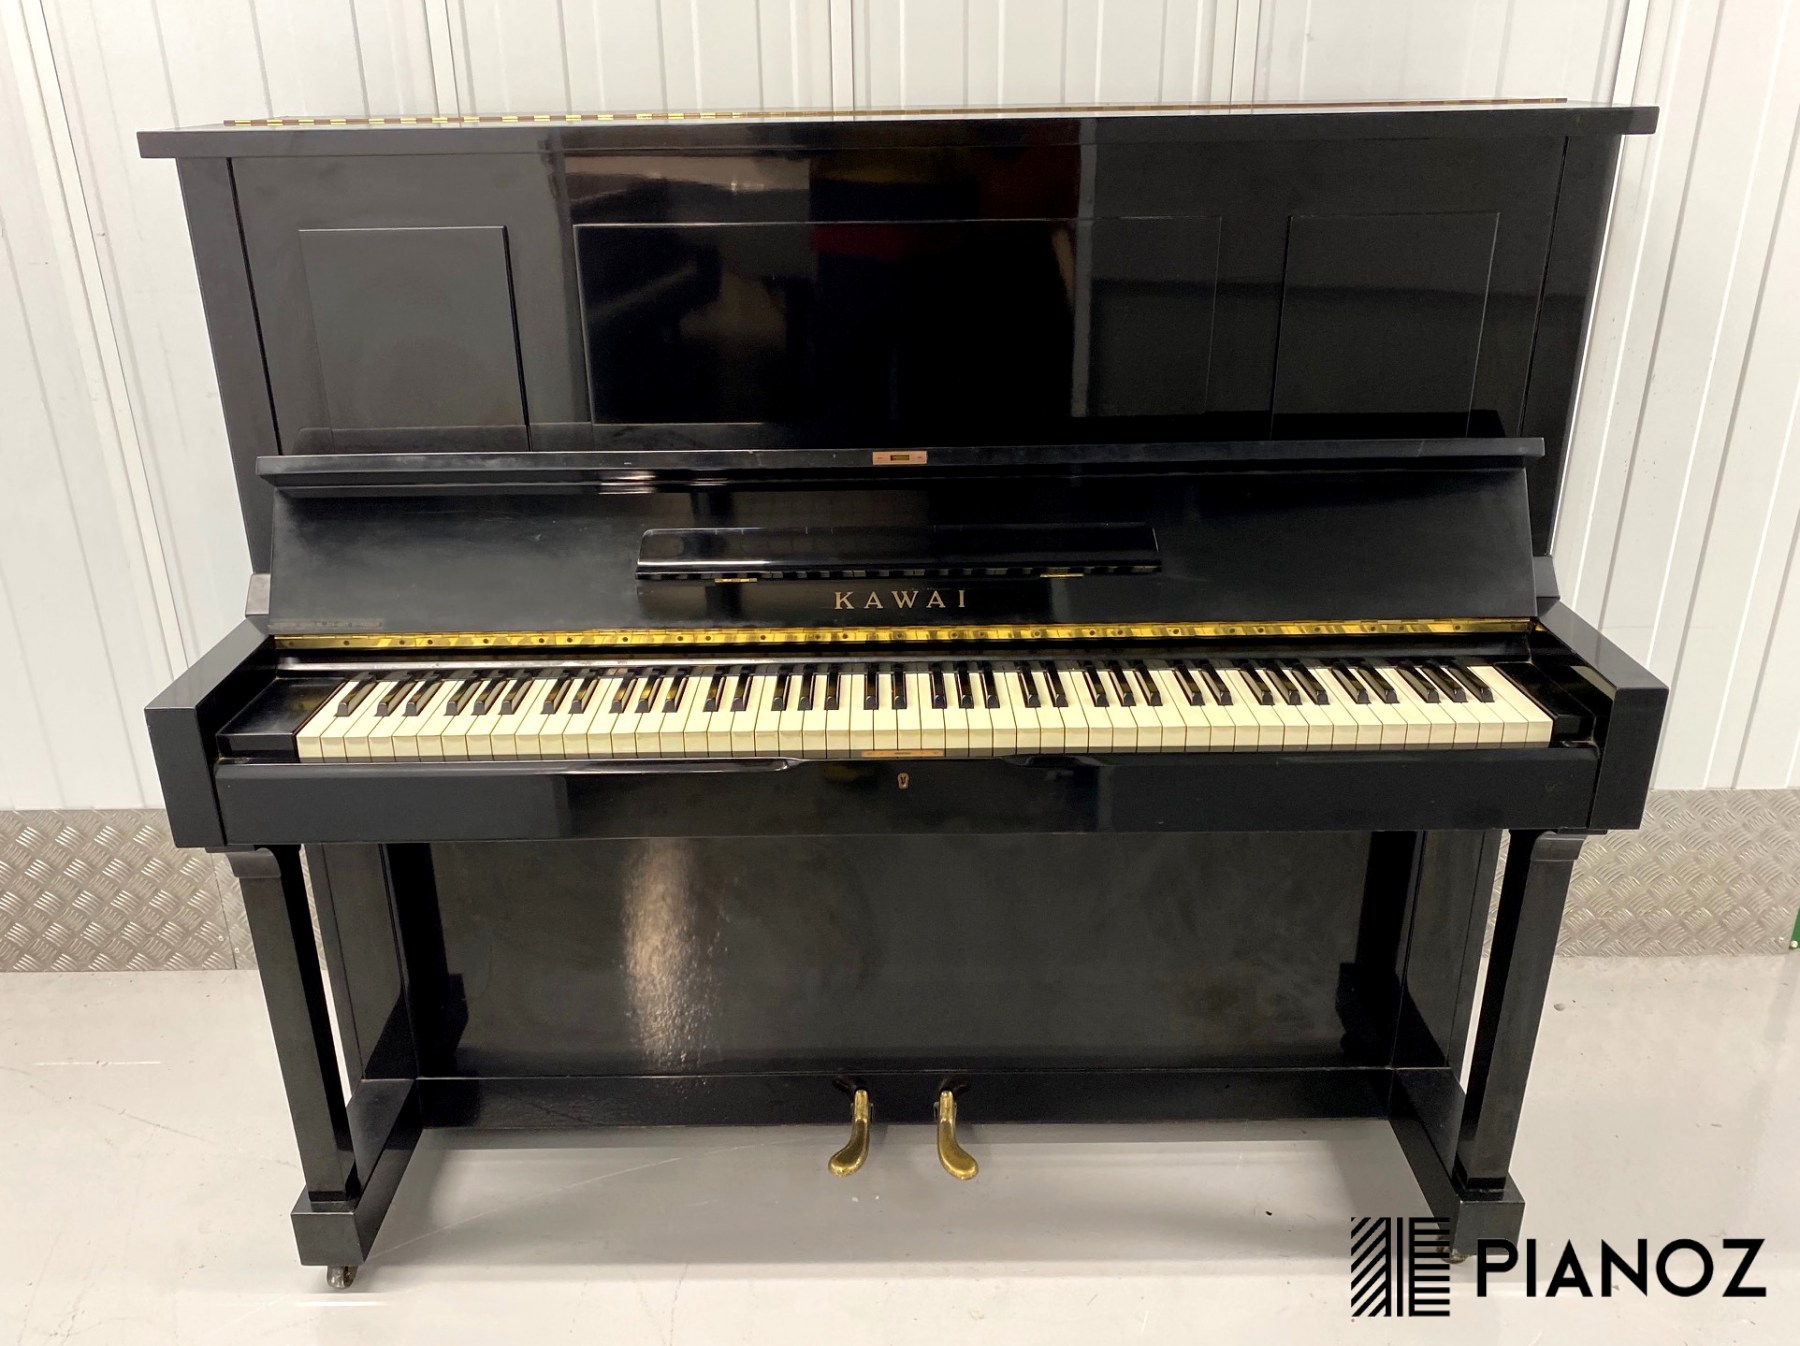 Kawai Black Gloss Upright Piano piano for sale in UK